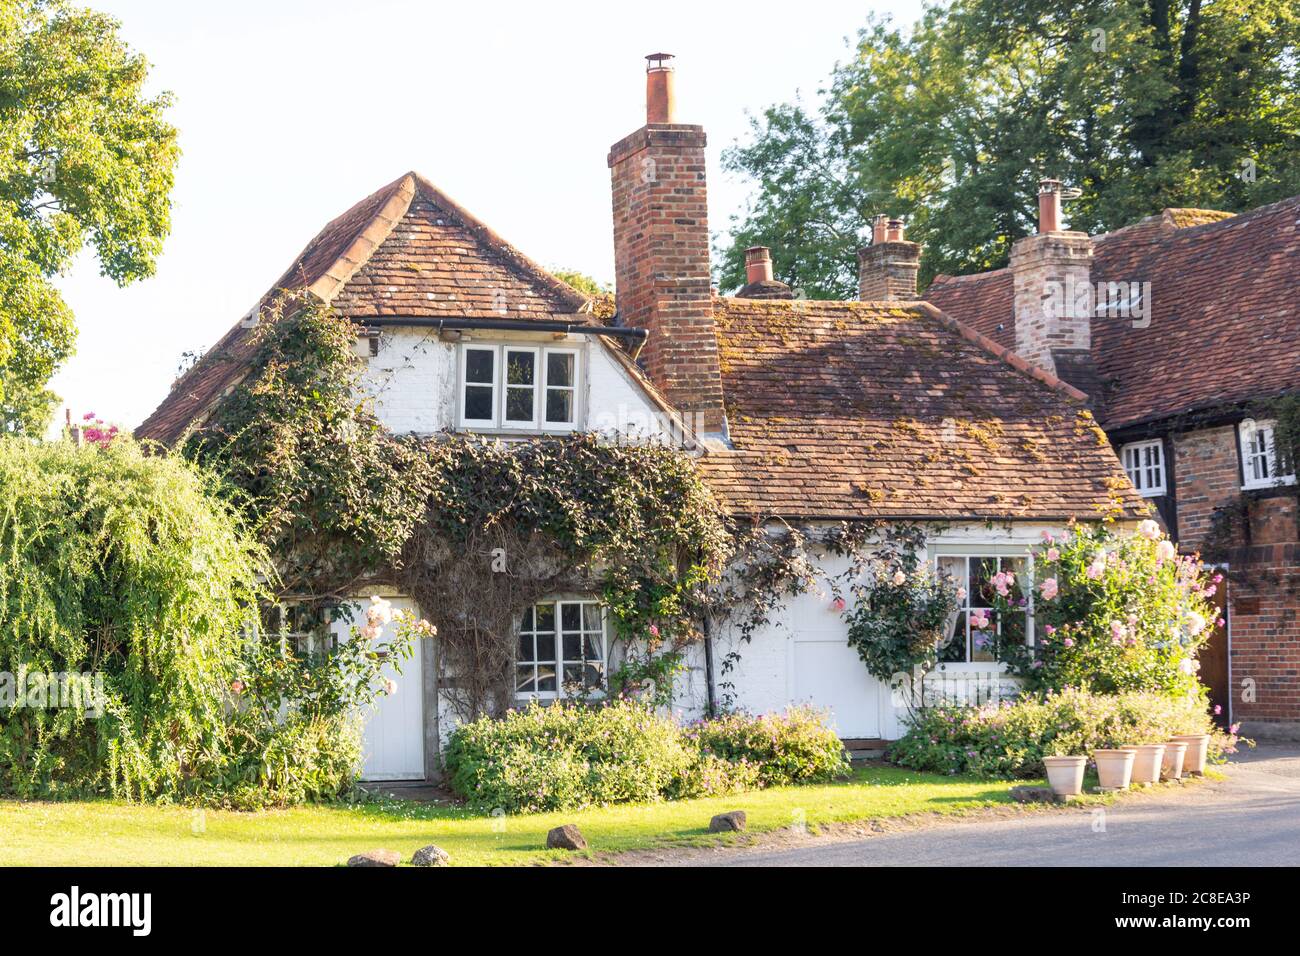 Période cottage, Turville, Buckinghamshire, Angleterre, Royaume-Uni Banque D'Images